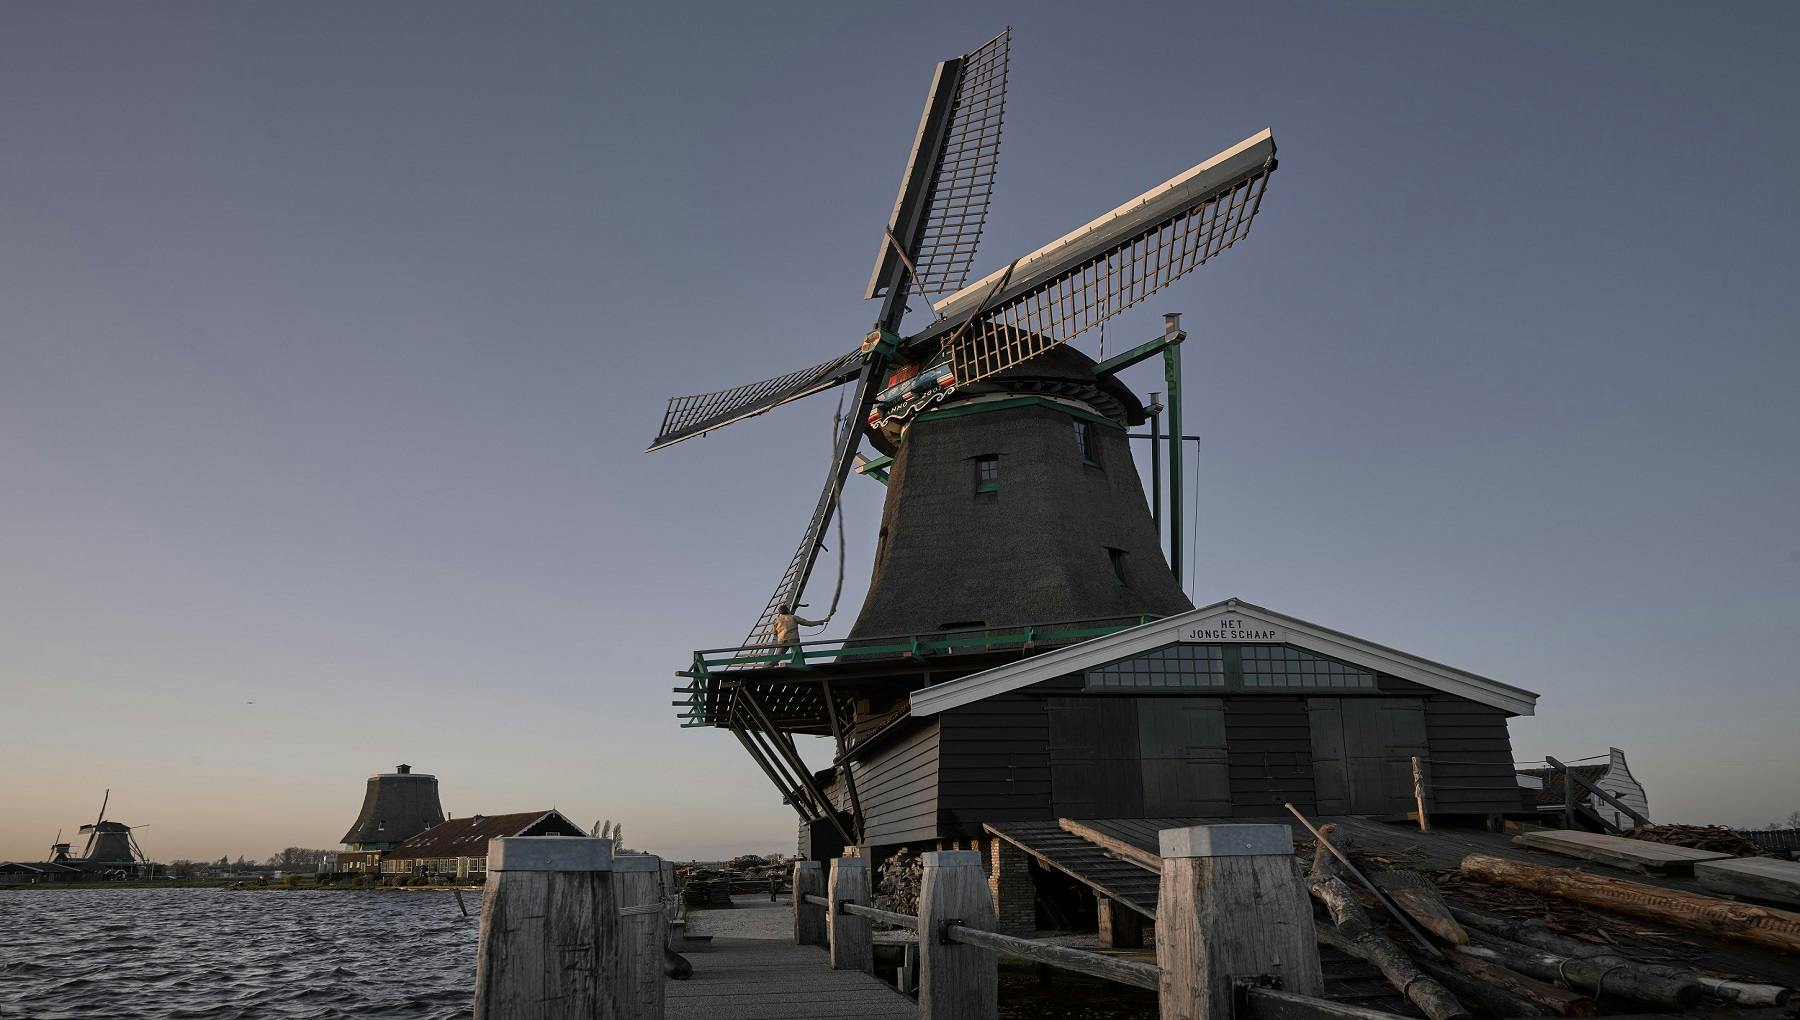 Vereniging de Zaansche Molen (Zaan Windmill Society)